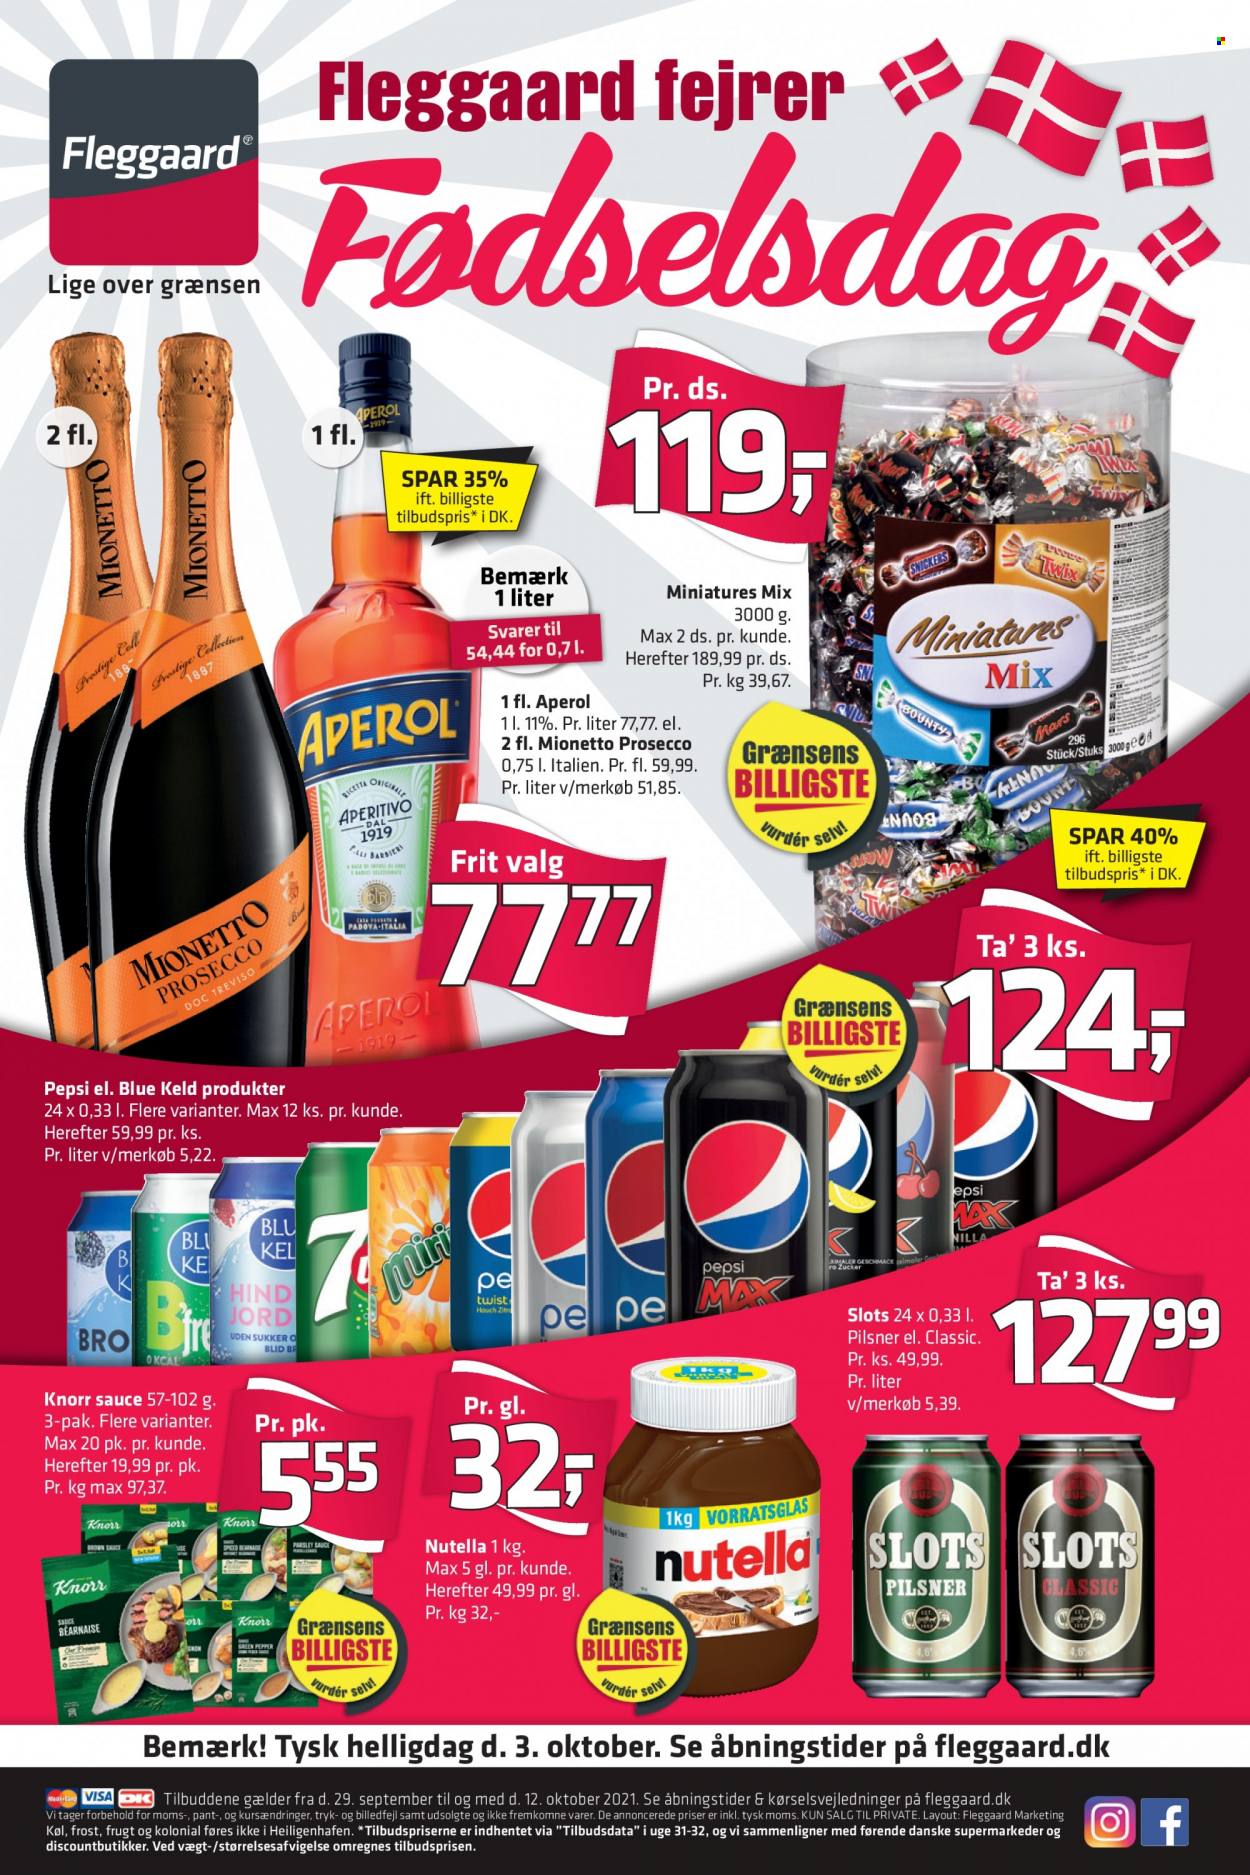 thumbnail - Fleggaard tilbud  - 29.9.2021 - 12.10.2021 - tilbudsprodukter - øl, Blue Keld, Knorr, sauce, Nutella, Pepsi, prosecco, Aperol. Side 1.